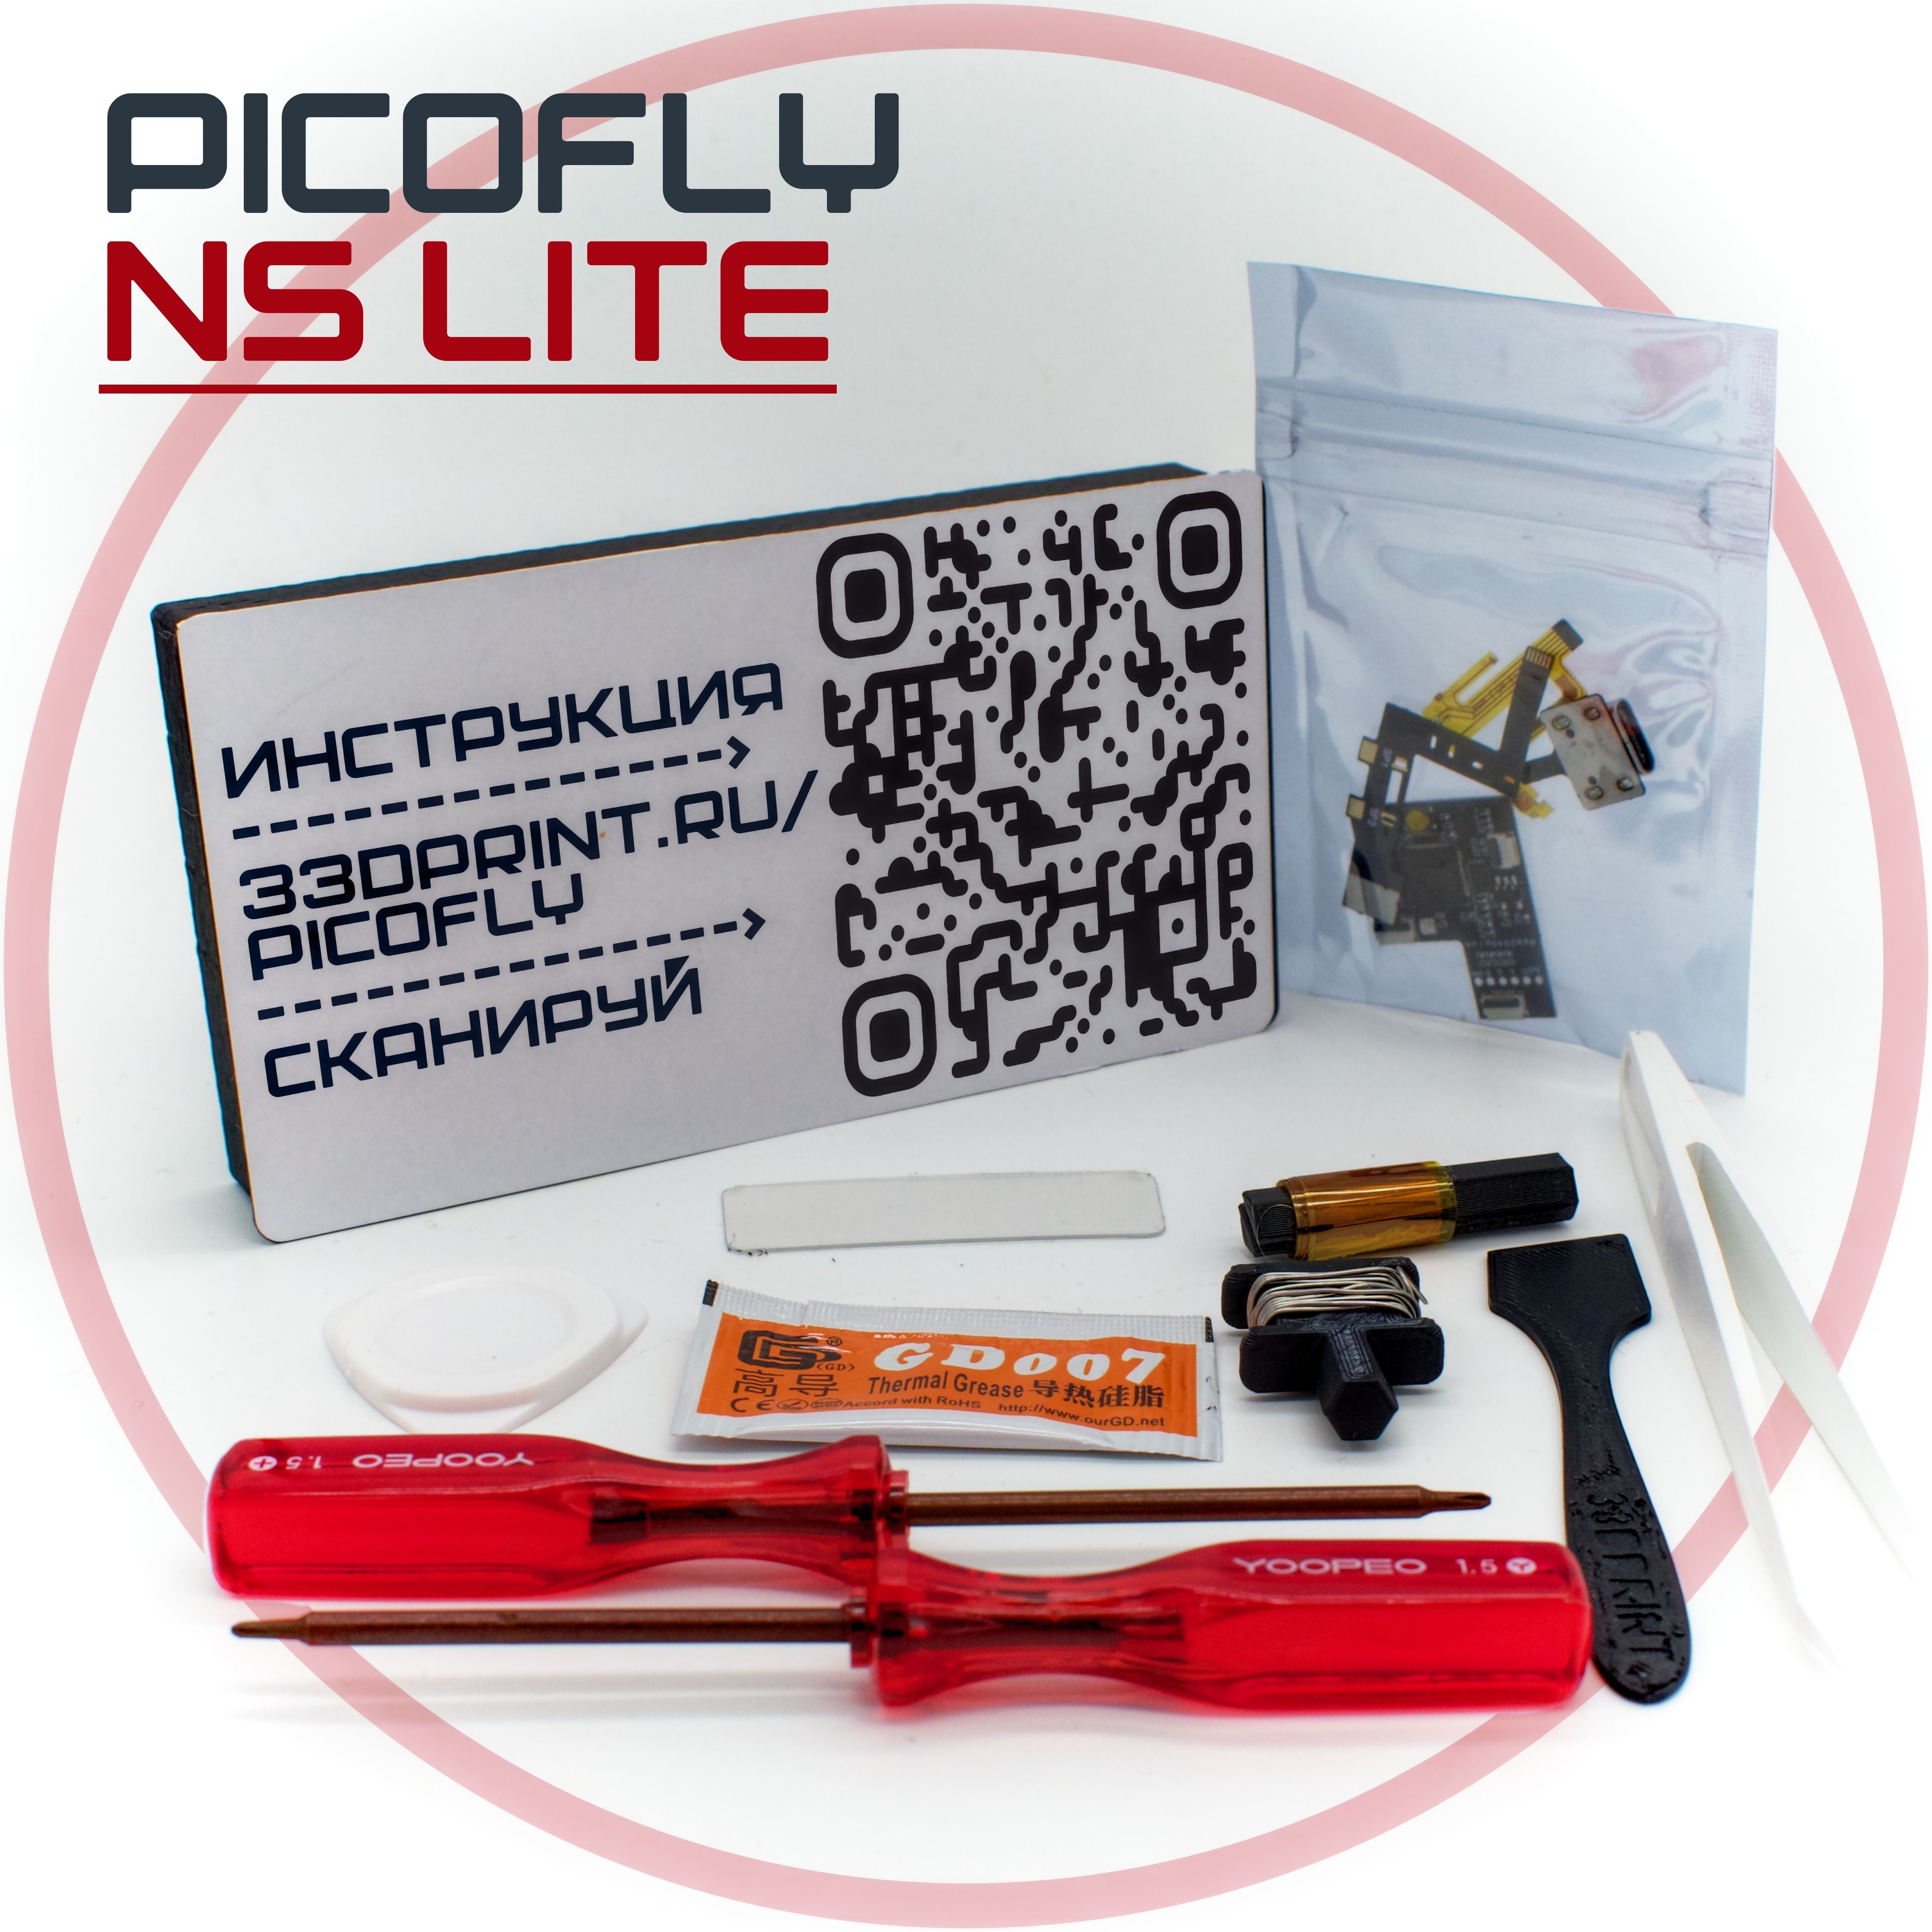 Picofly nintendo switch. HWFLY rp2040 Lite. Чип picofly. NS Lite picofly. Установка picofly 2040 Nintendo Switch Lite.